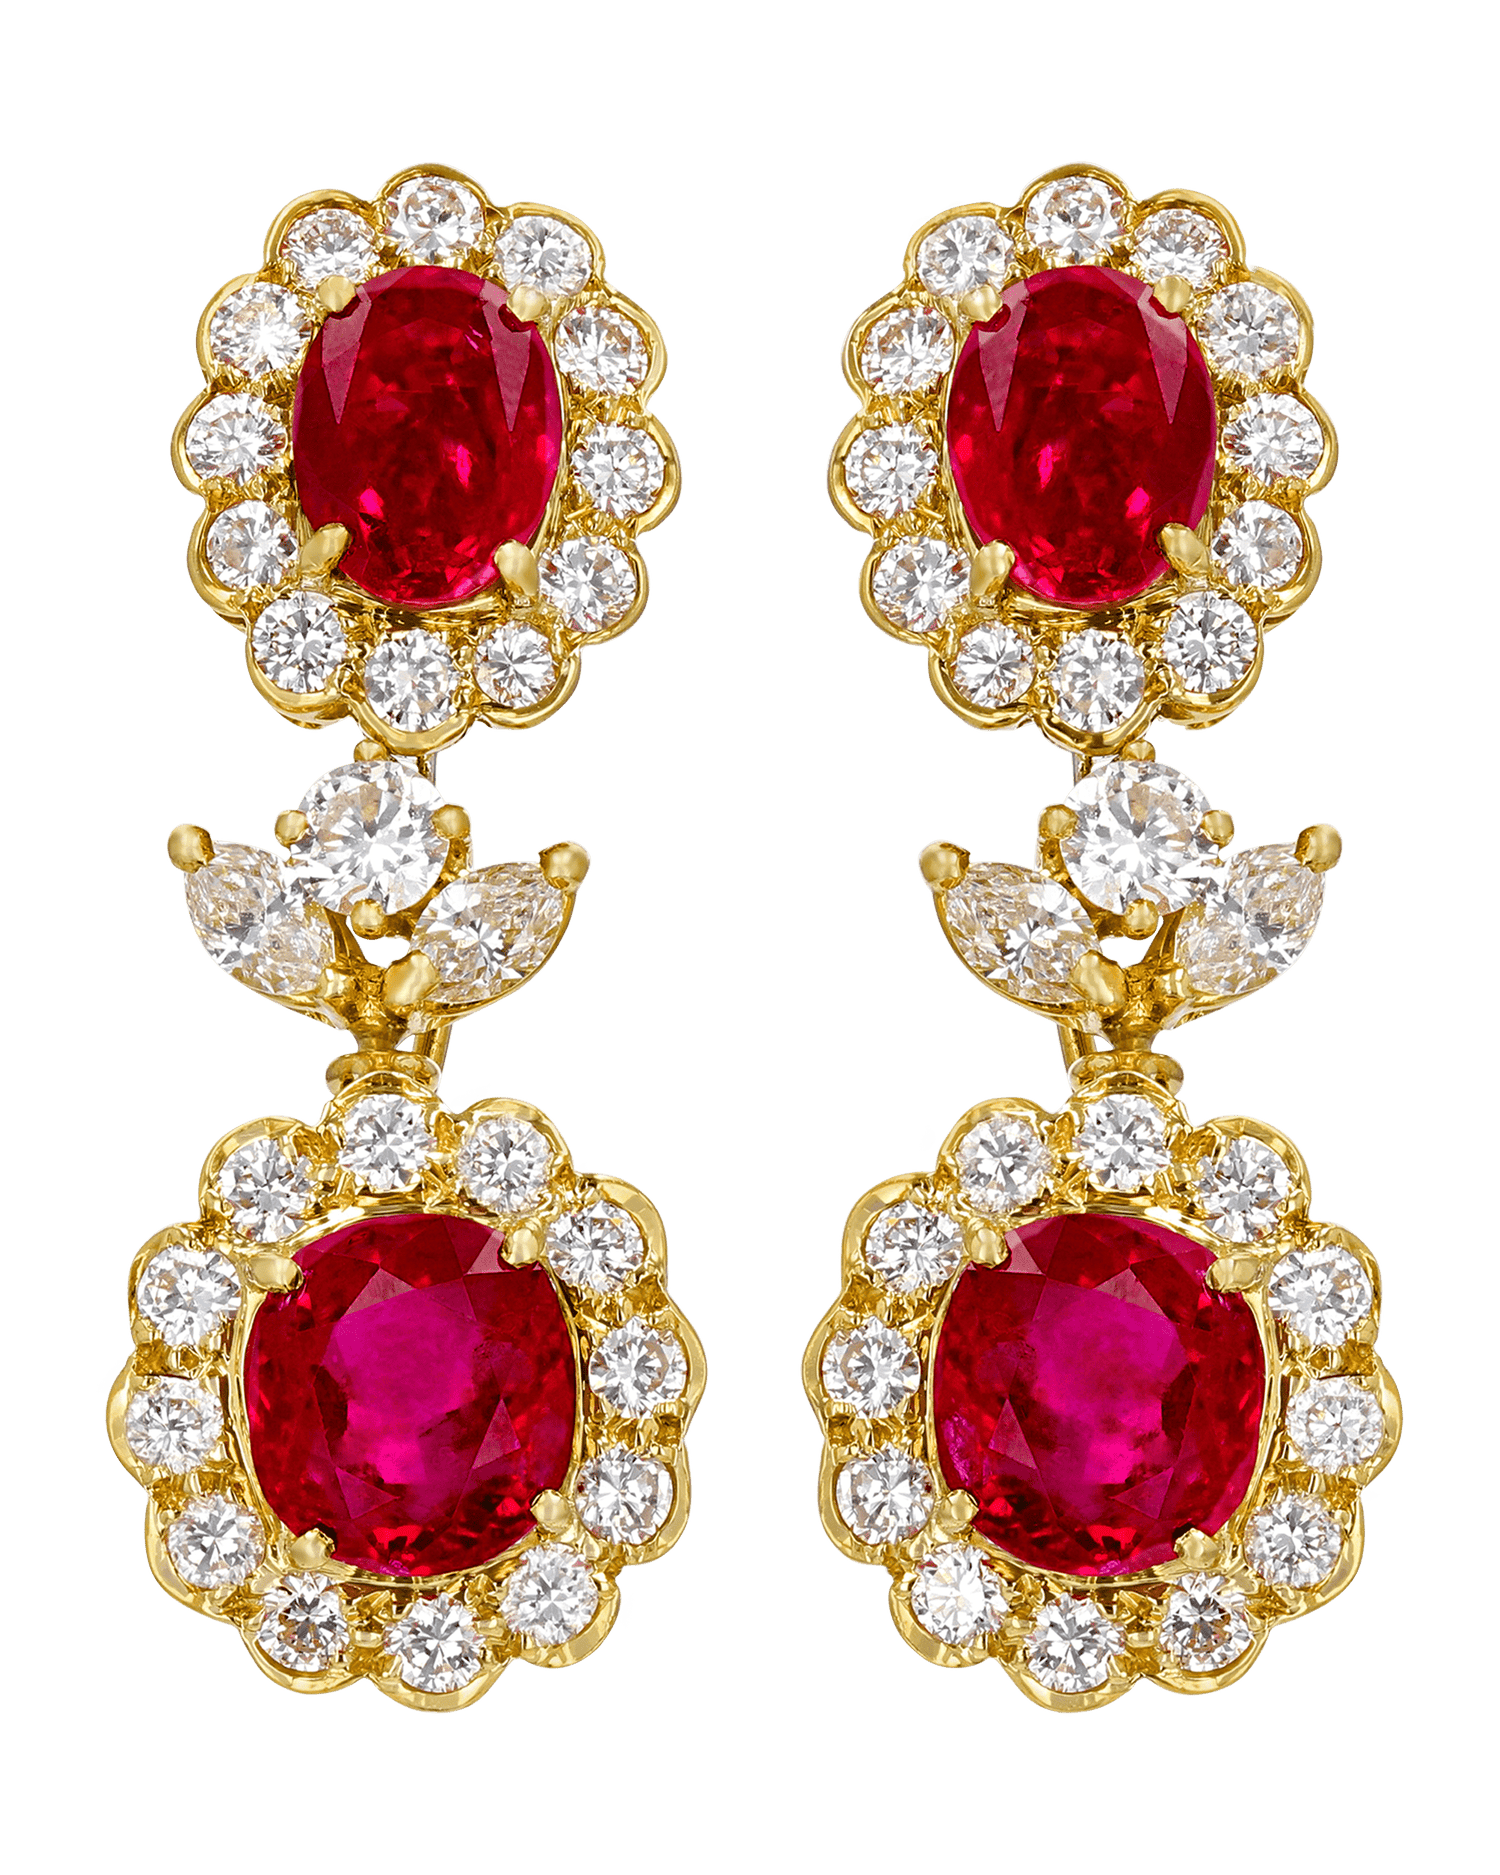 Burma Ruby Earrings, 7.87 Carats